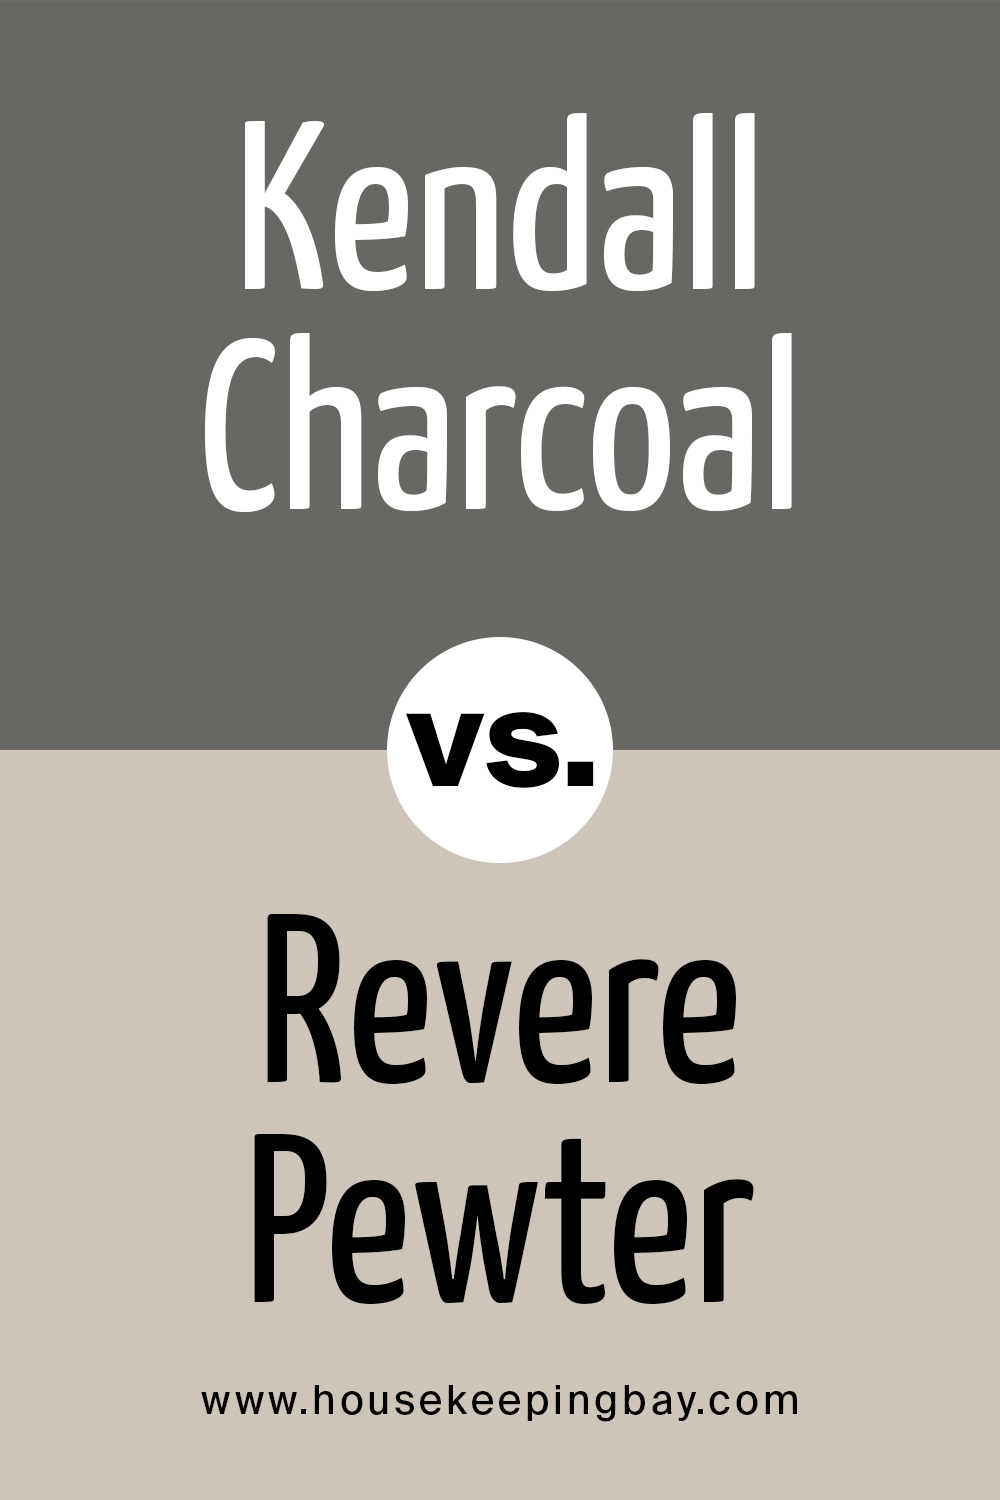 Kendall Charcoal vs Revere Pewter